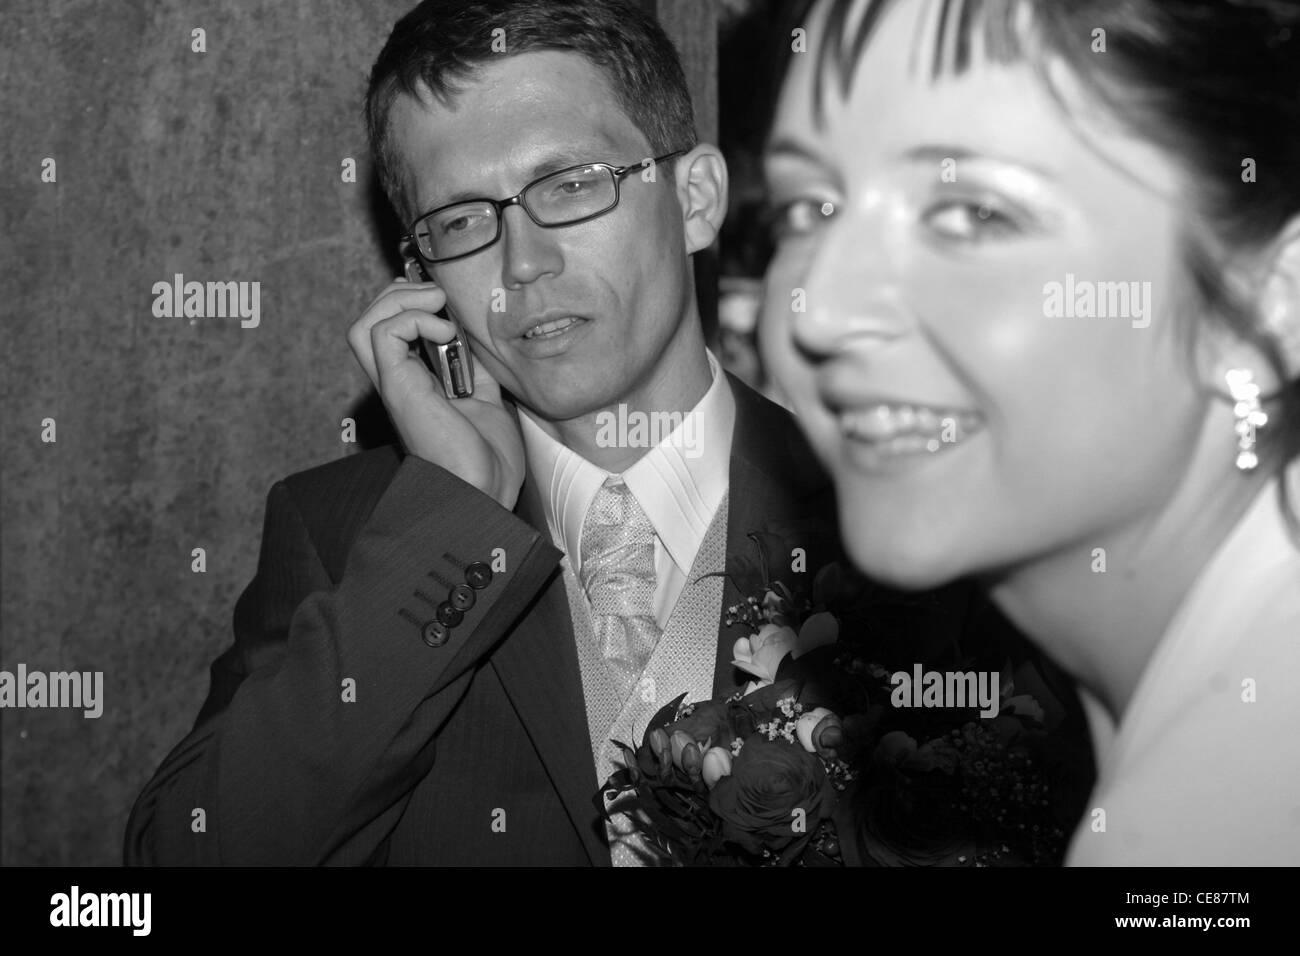 wedding pair - calling Stock Photo